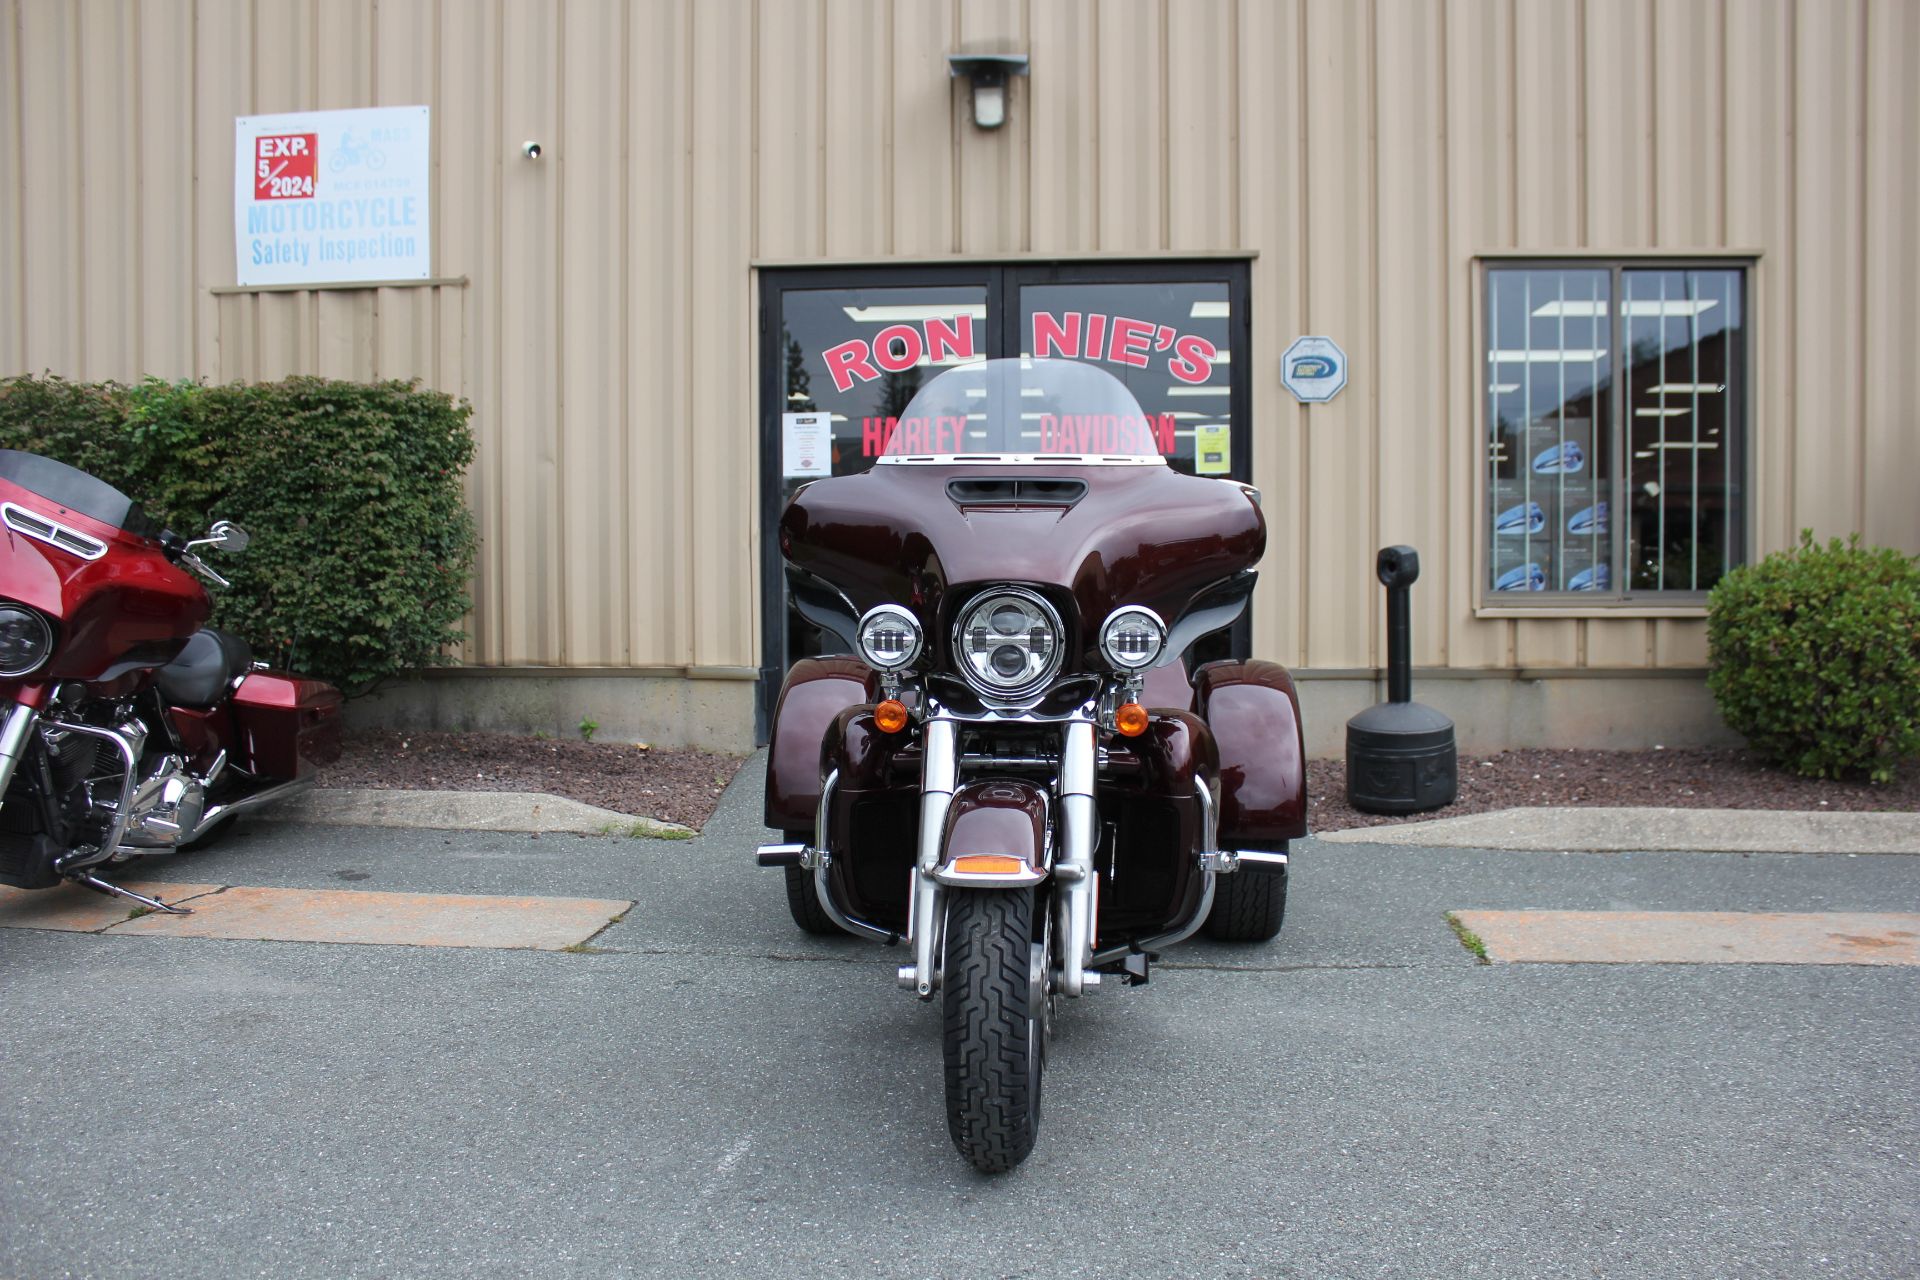 2019 Harley-Davidson Tri Glide® Ultra in Pittsfield, Massachusetts - Photo 7